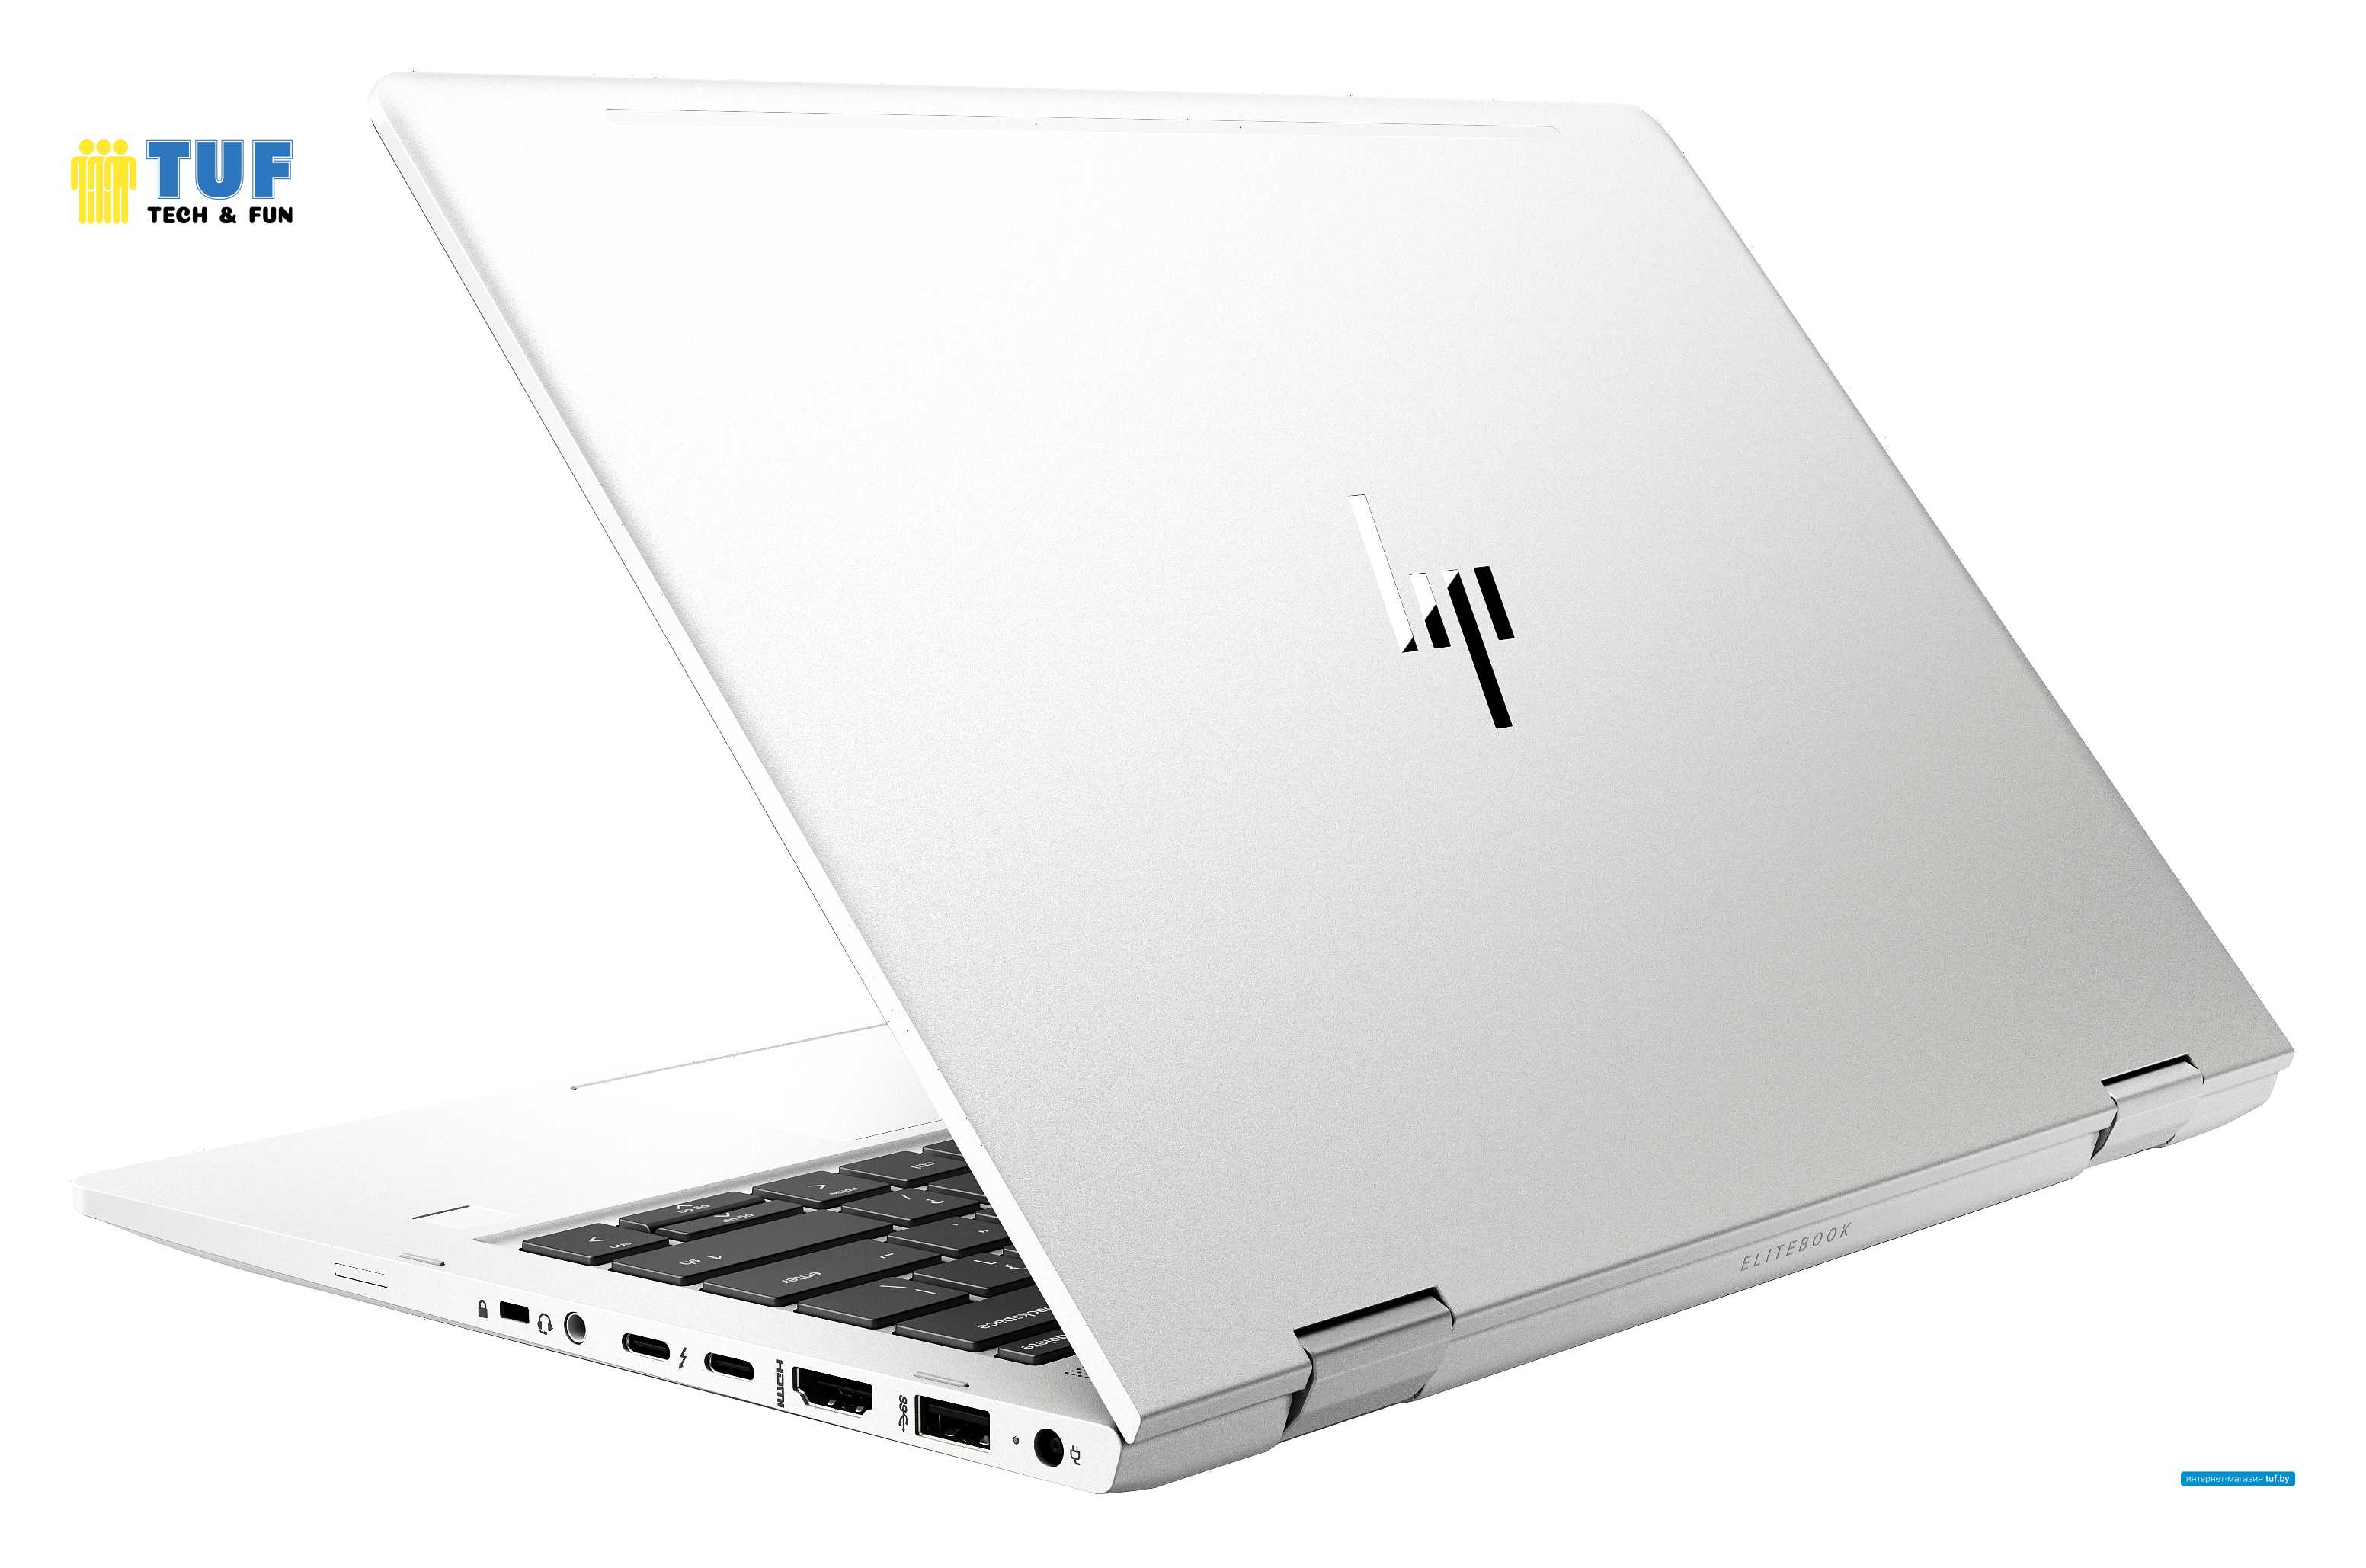 Ноутбук 2-в-1 HP EliteBook x360 830 G6 6XD34EA